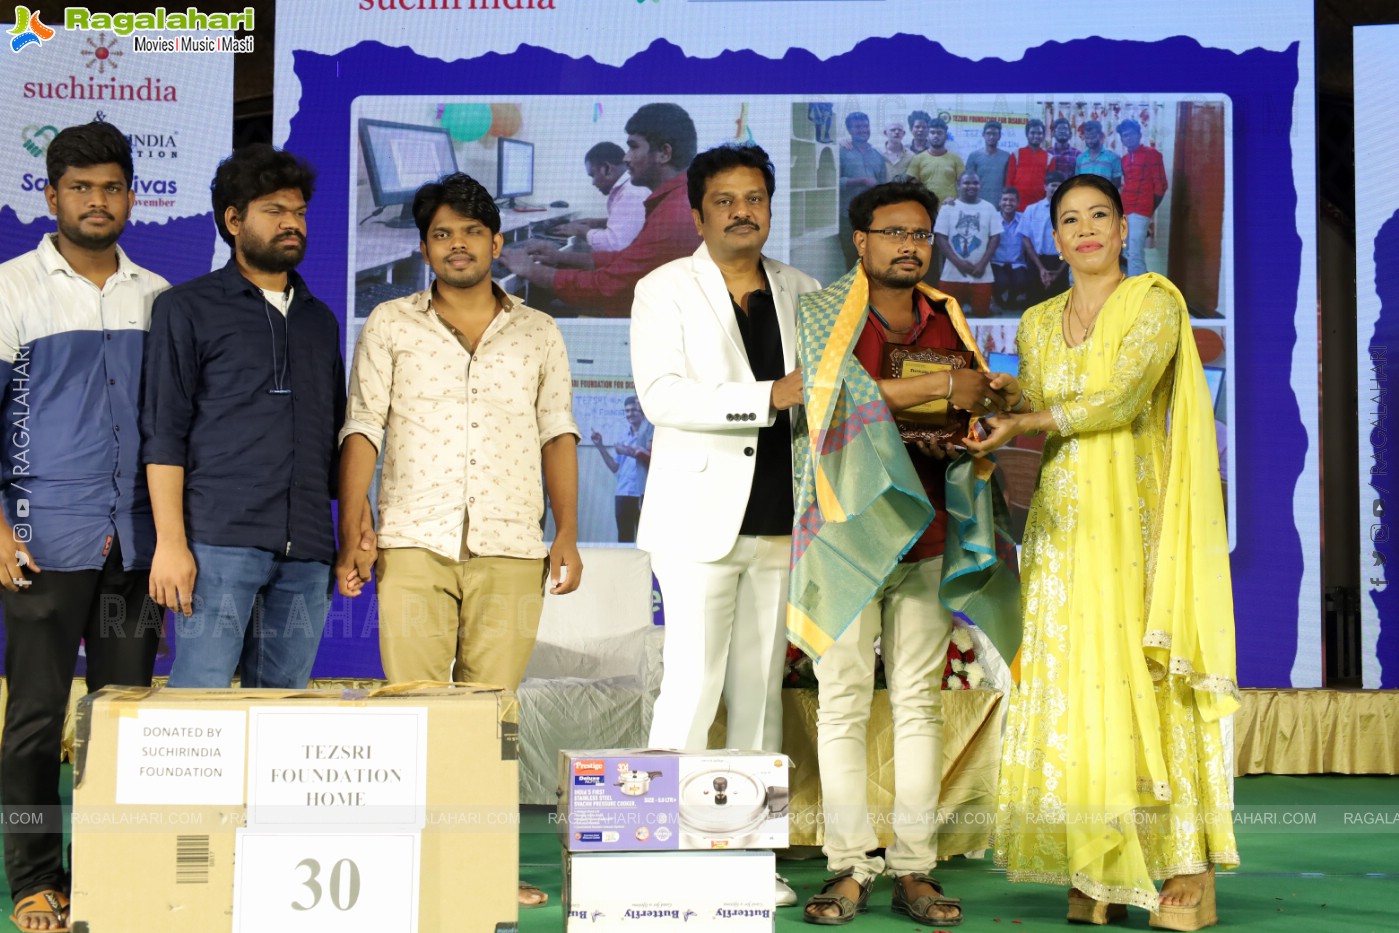 Sankalp Divas 2023: Padma Vibhushan Mrs. Mary Kom recieved Sankalp Kiron Puraskar Award